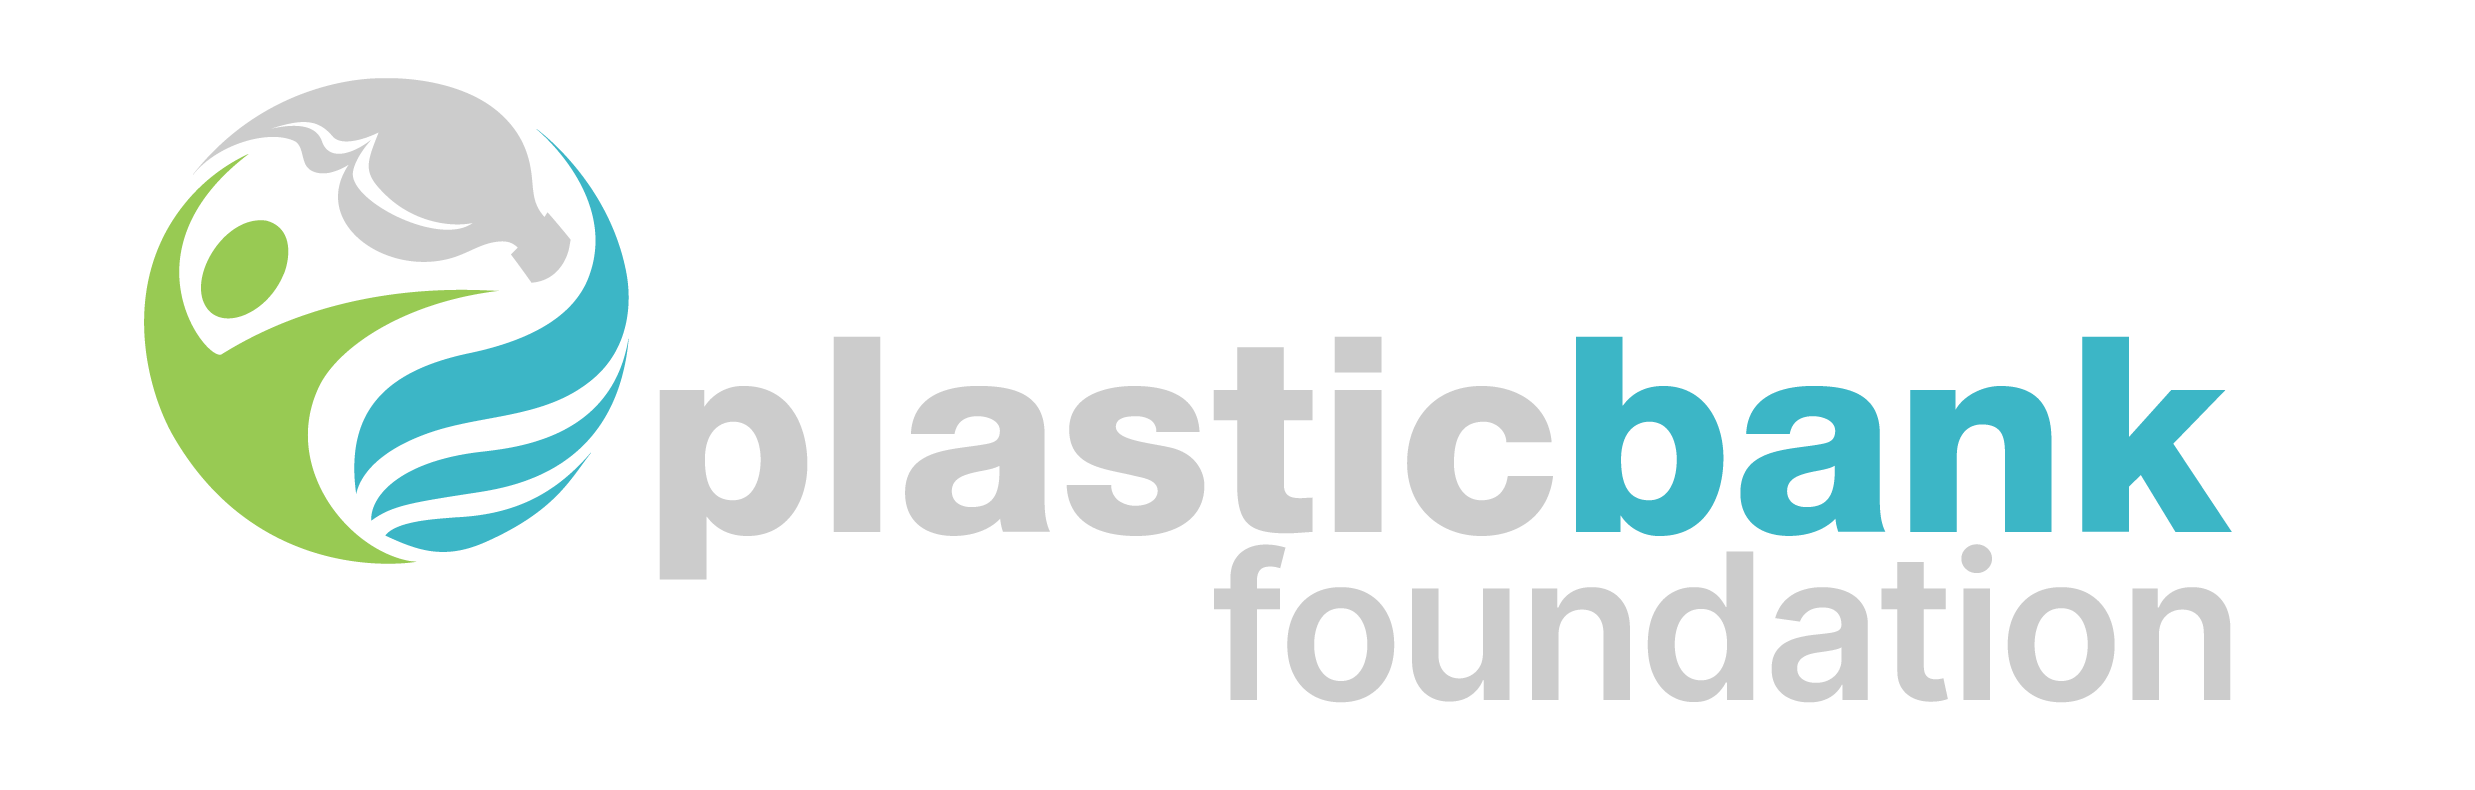 Plastic Bank Foundation hi-res logo